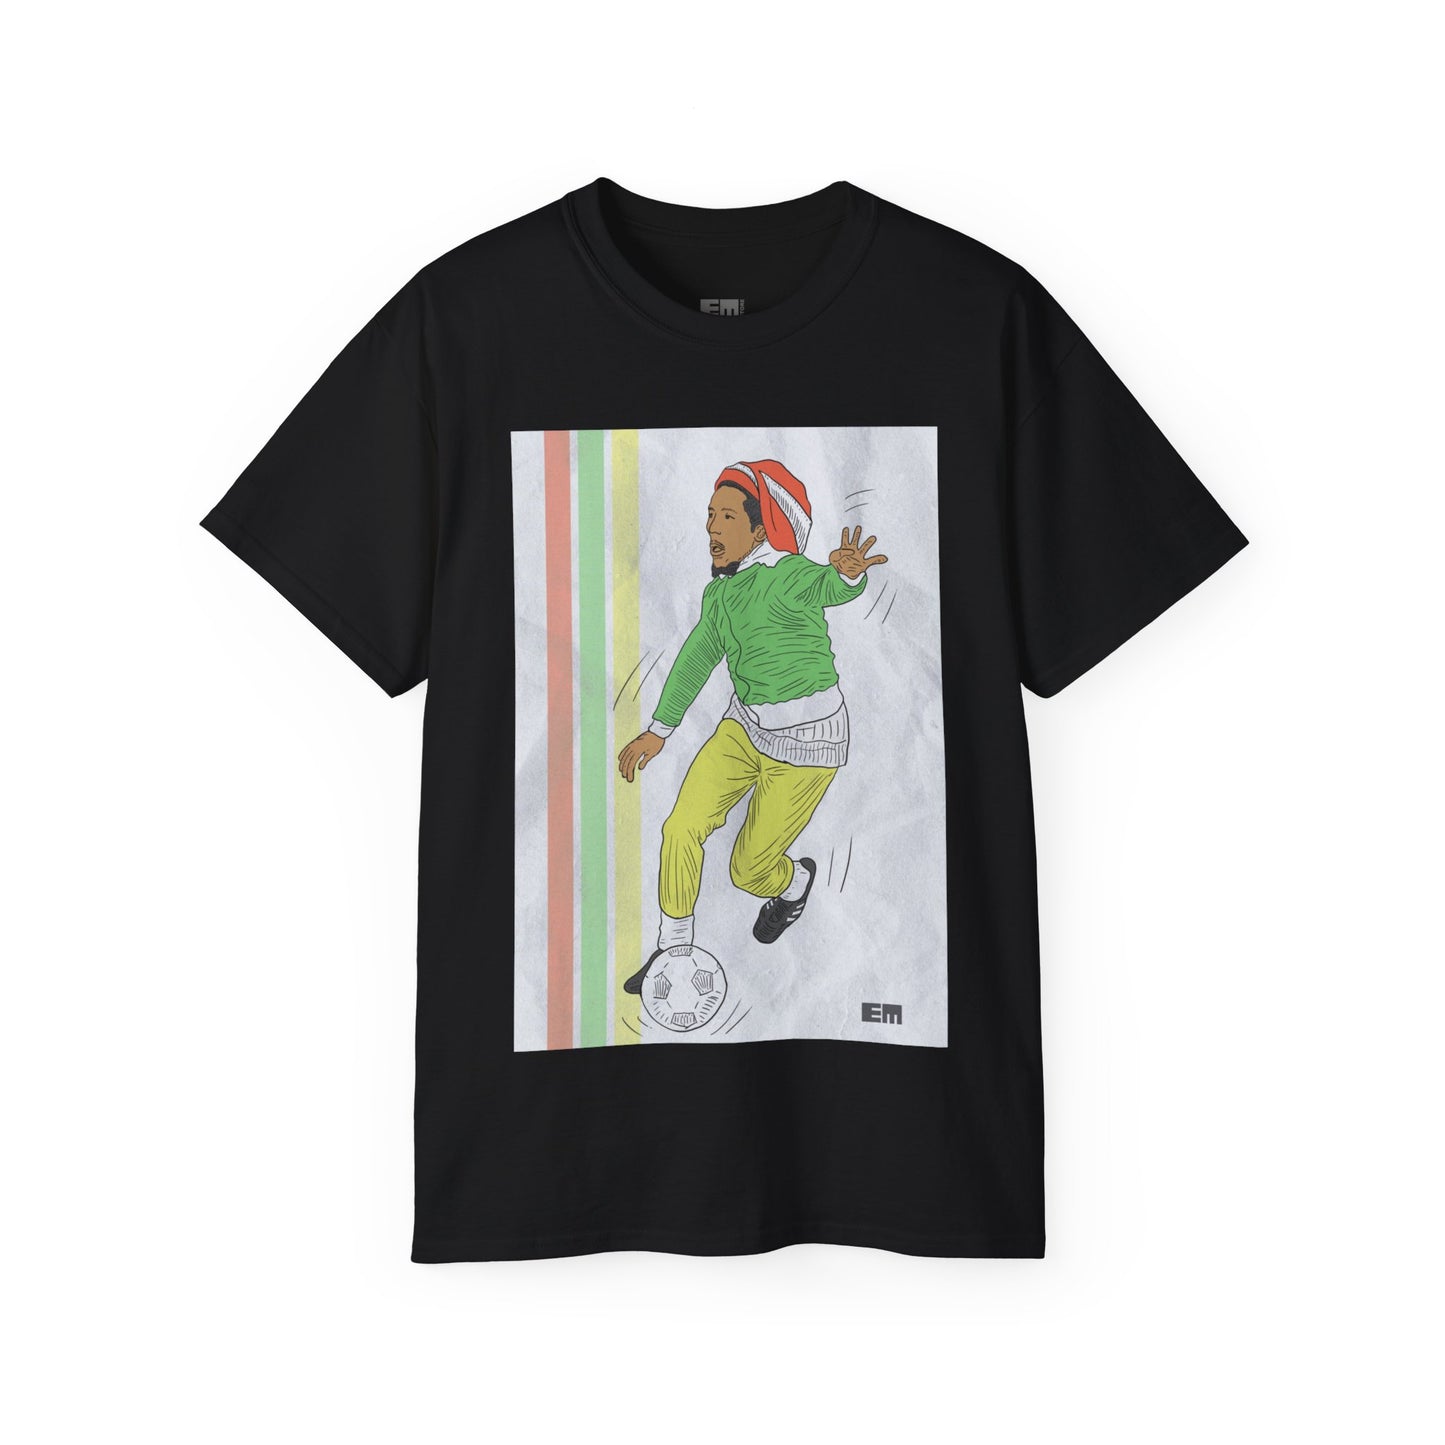 T-shirt Bob Marley playing soccer